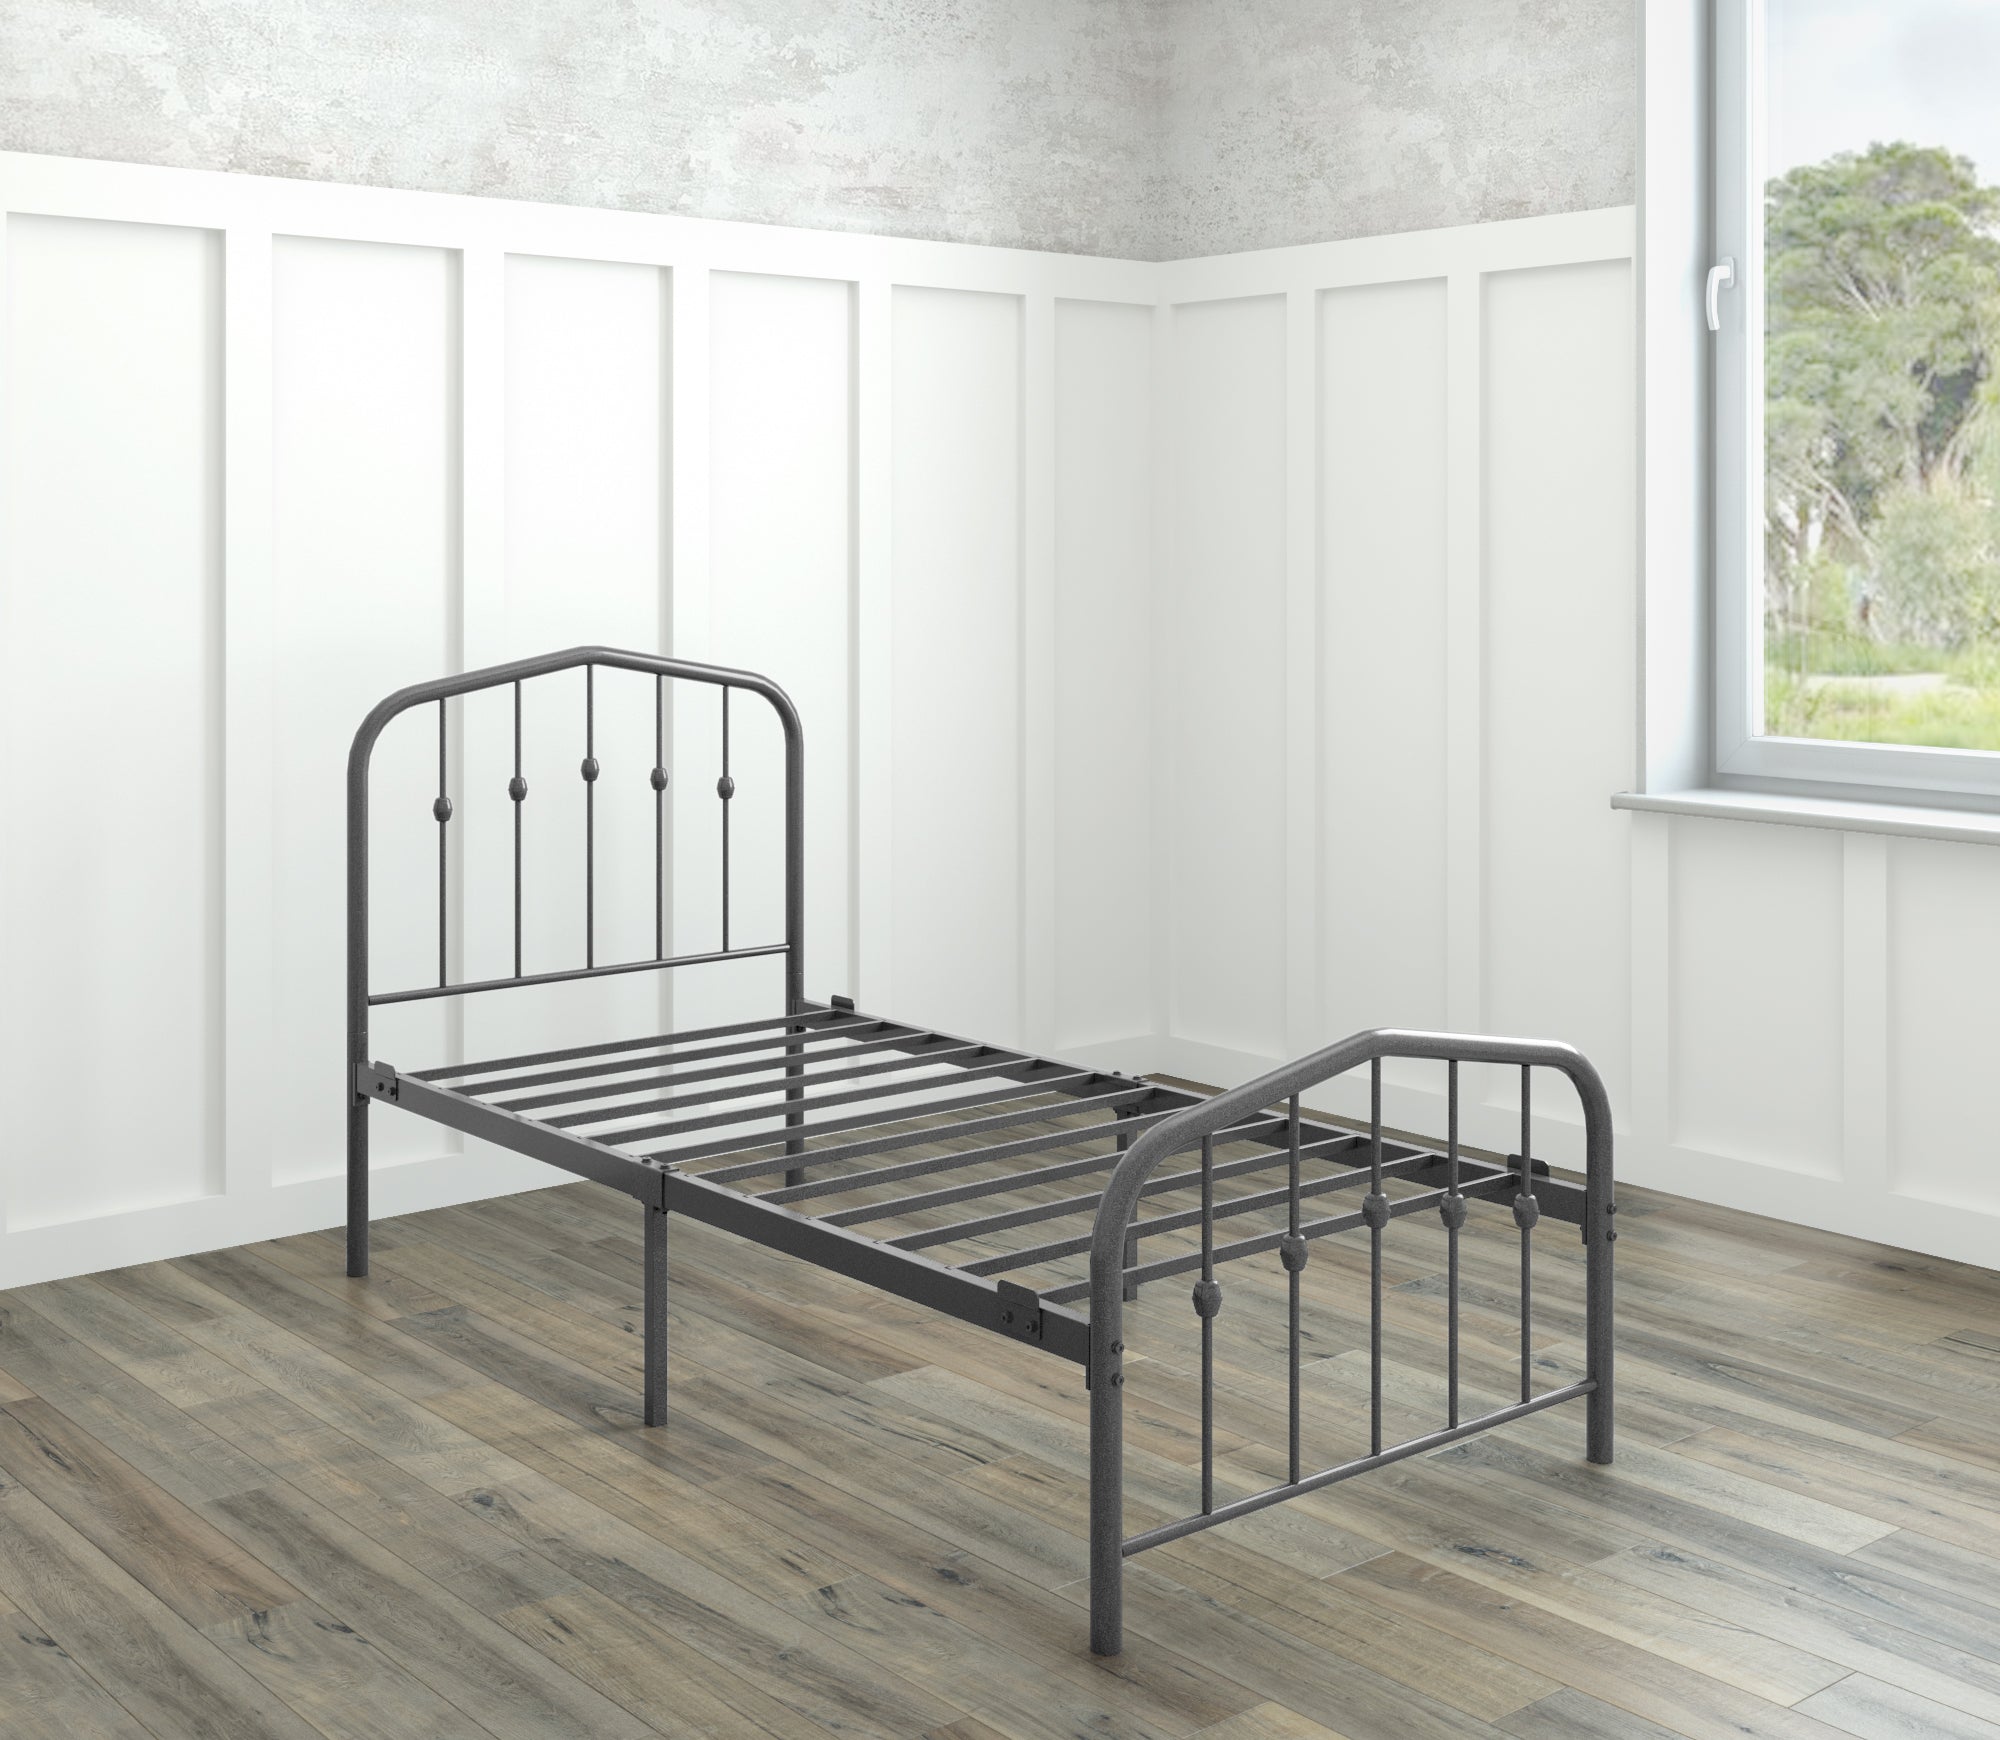 Washington Bed - Charcoal Grey - Ambee21